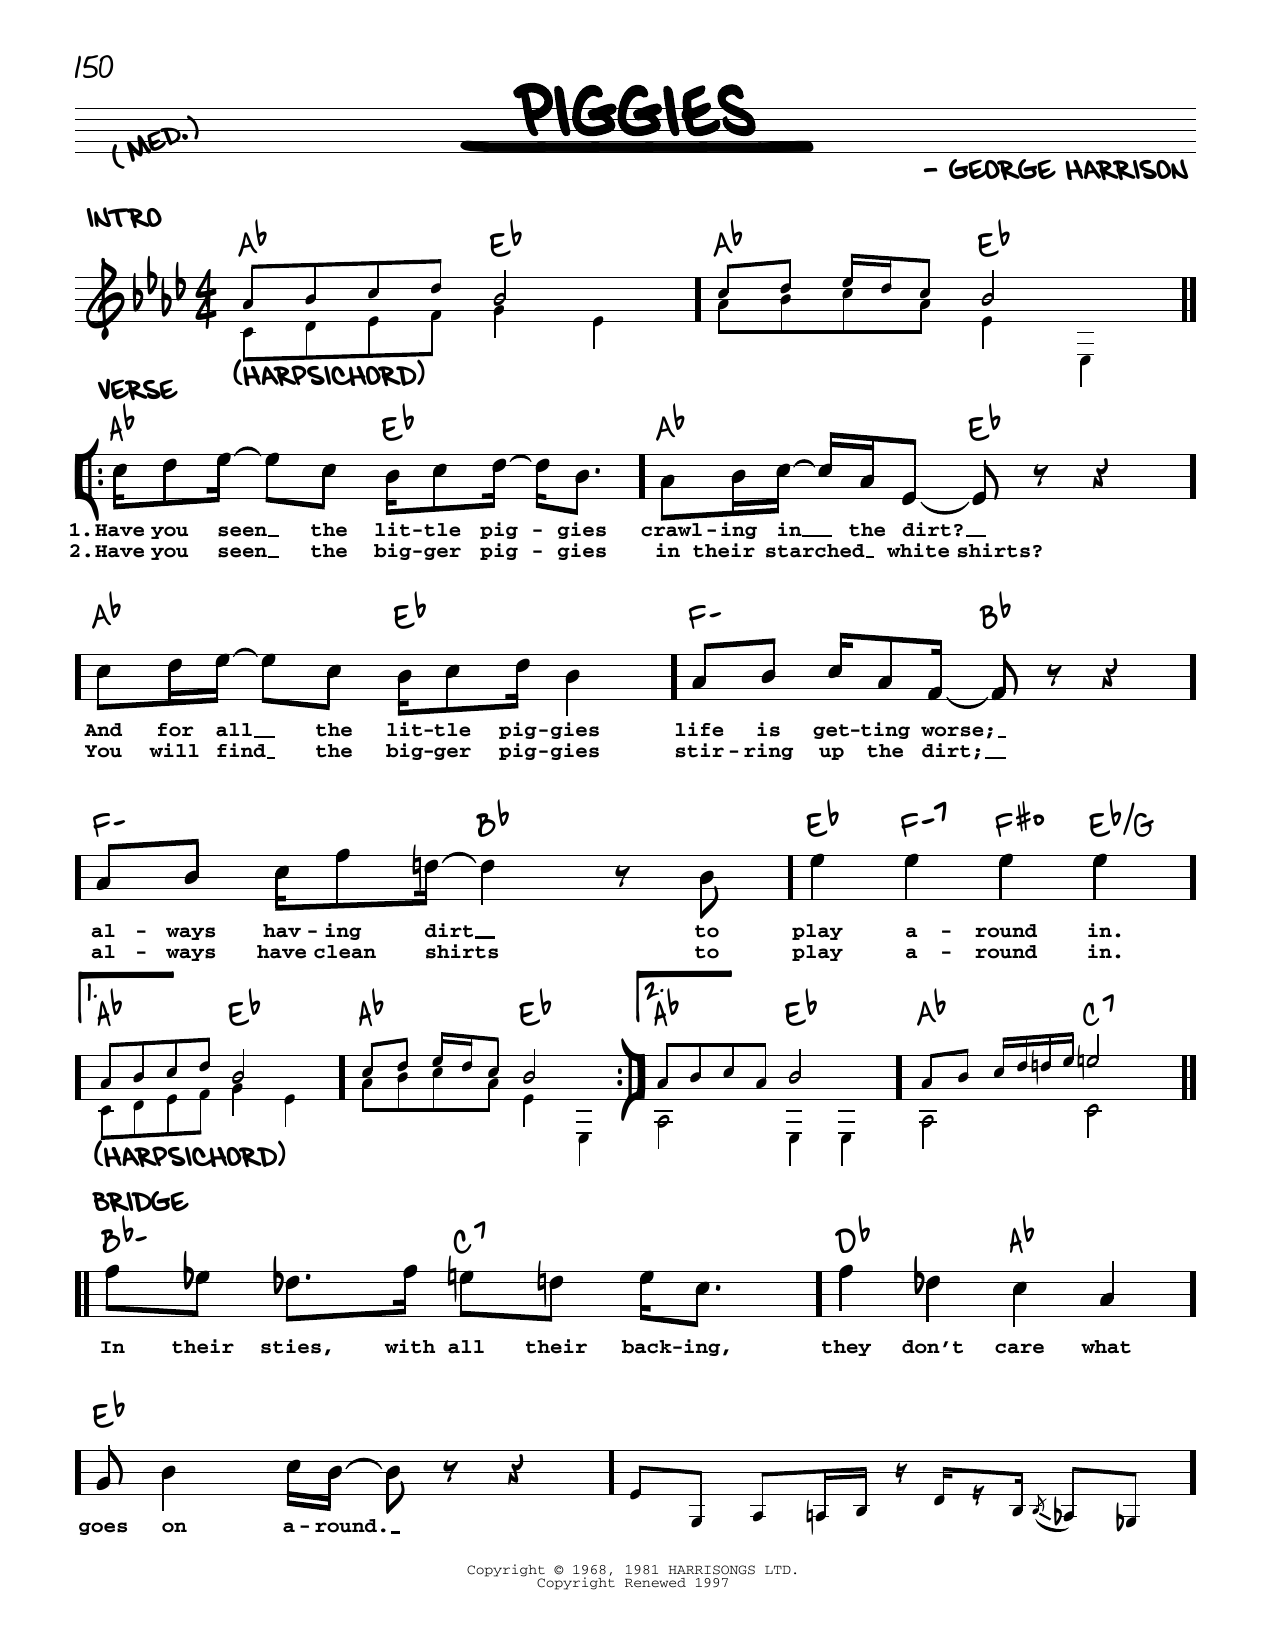 The Beatles Piggies [Jazz version] Sheet Music Notes & Chords for Real Book – Melody, Lyrics & Chords - Download or Print PDF